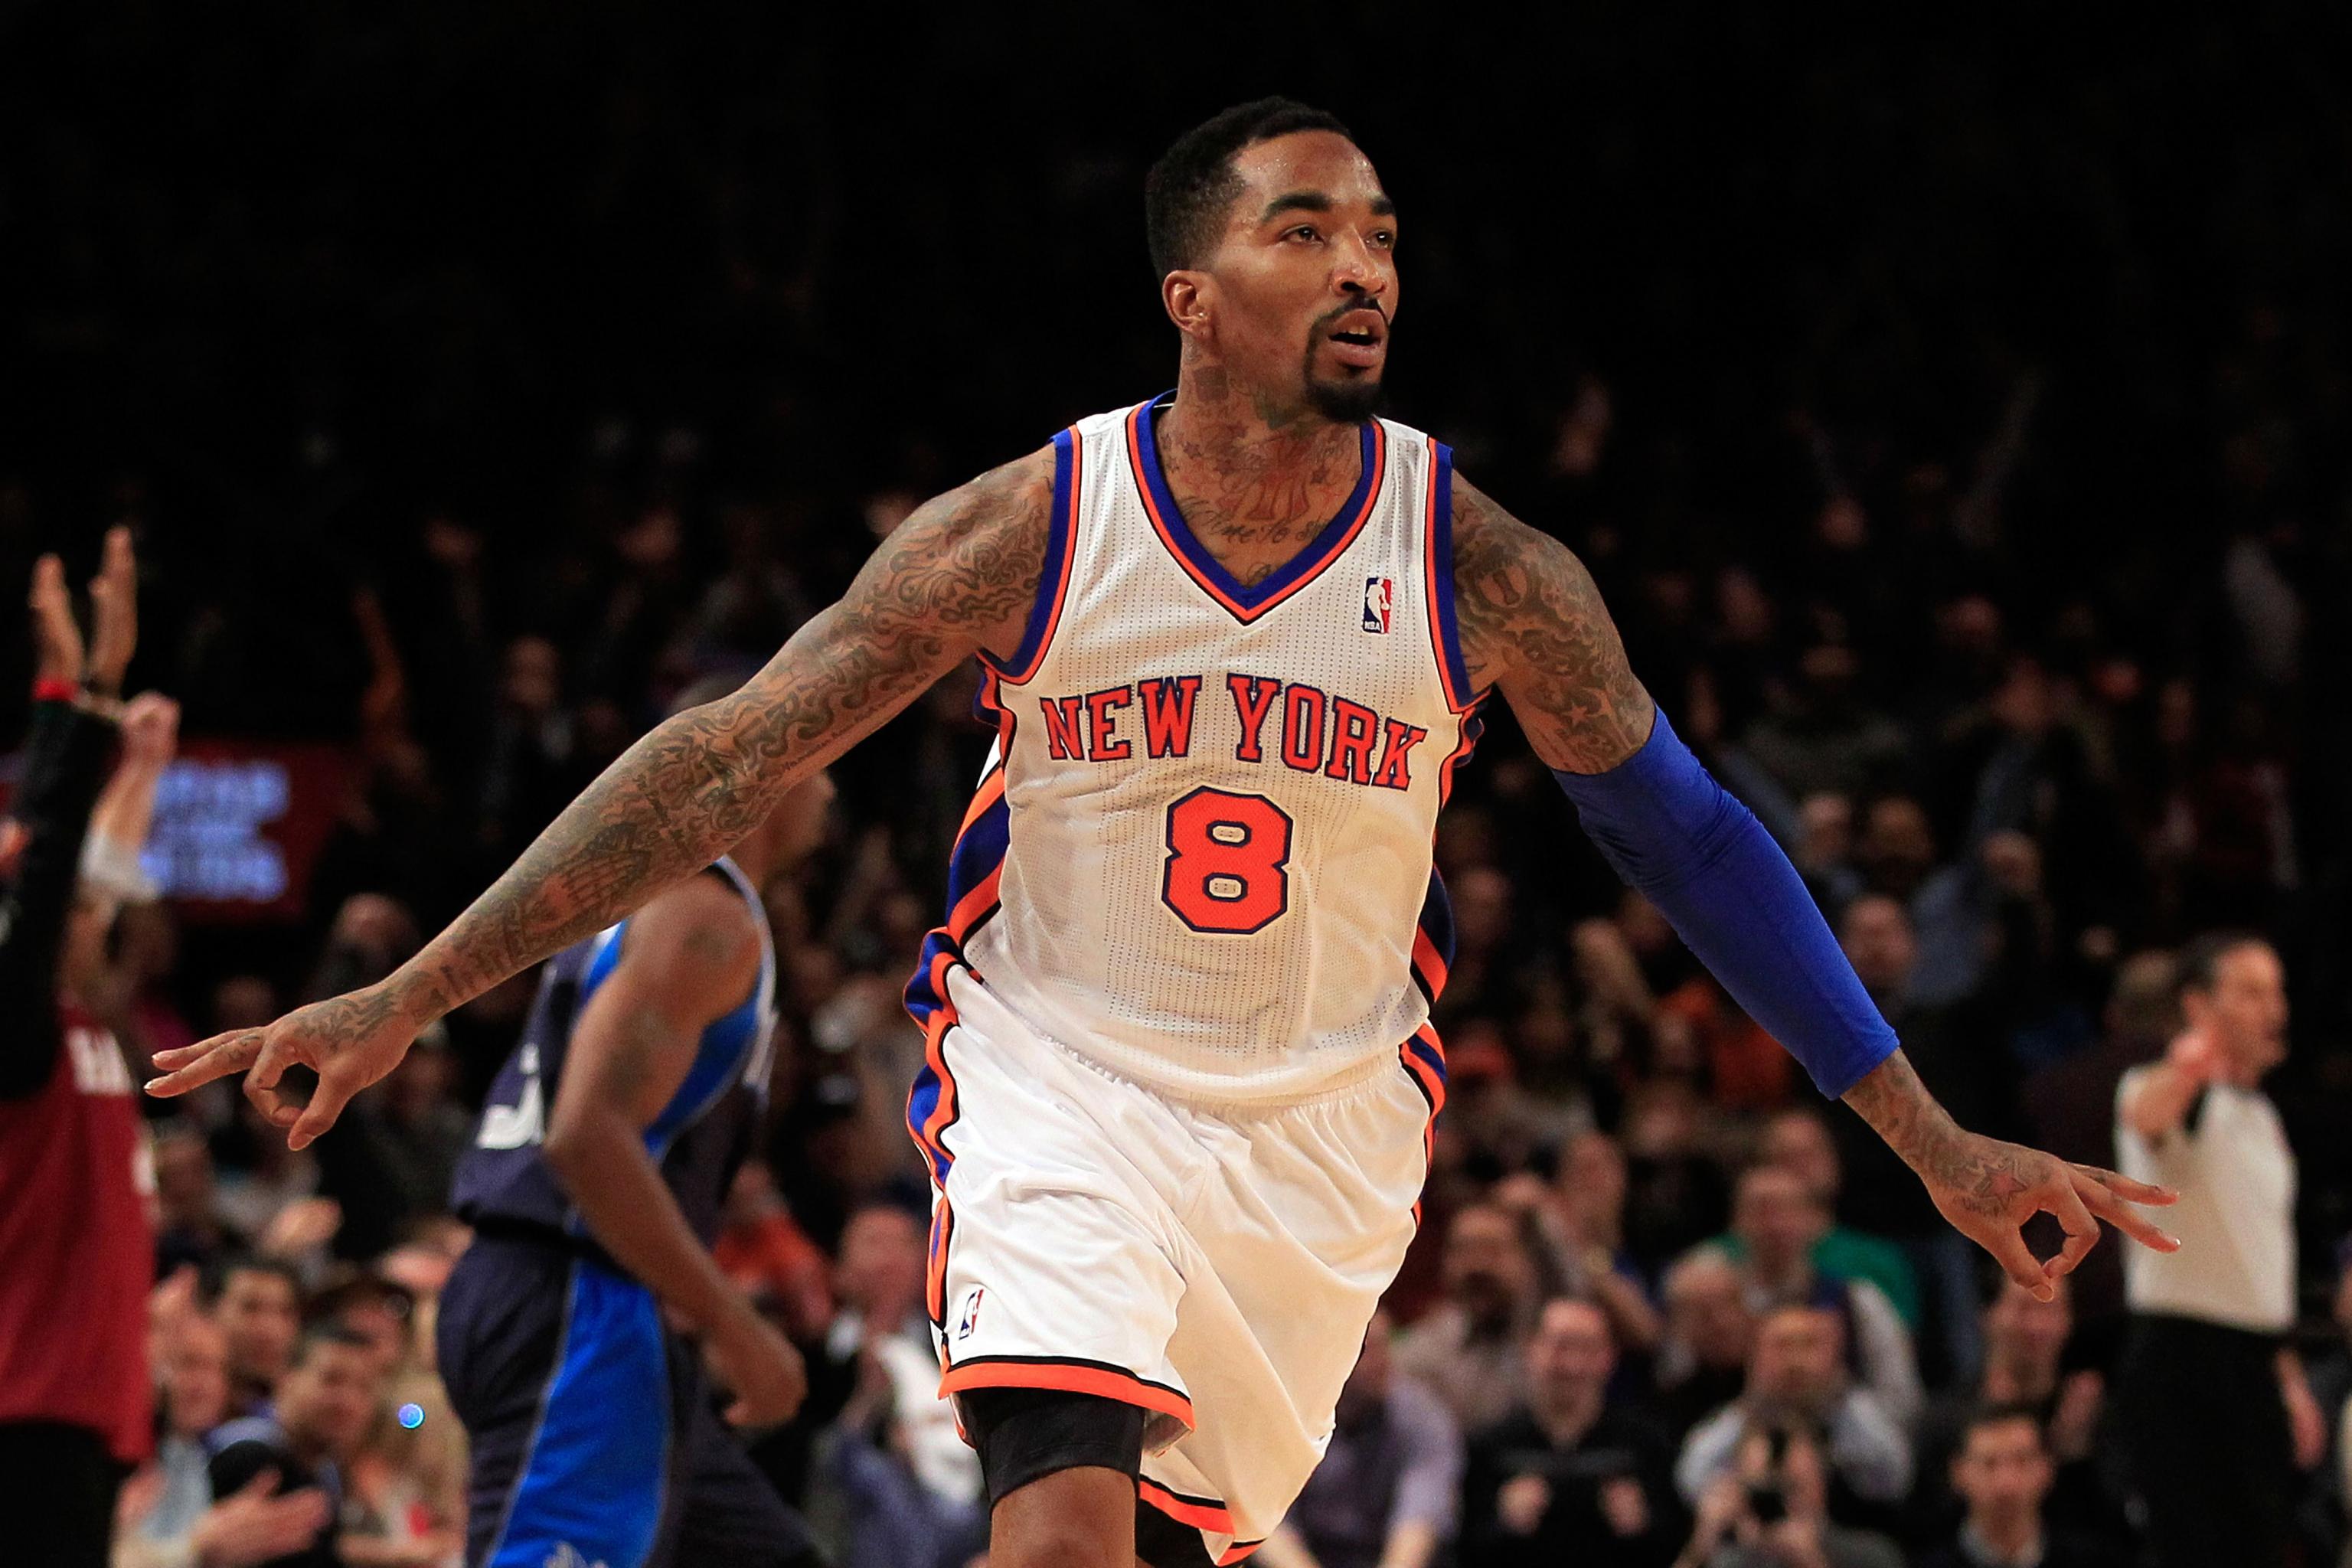 NBA Kicks Season Preview: J.R. Smith Is The New York Knicks